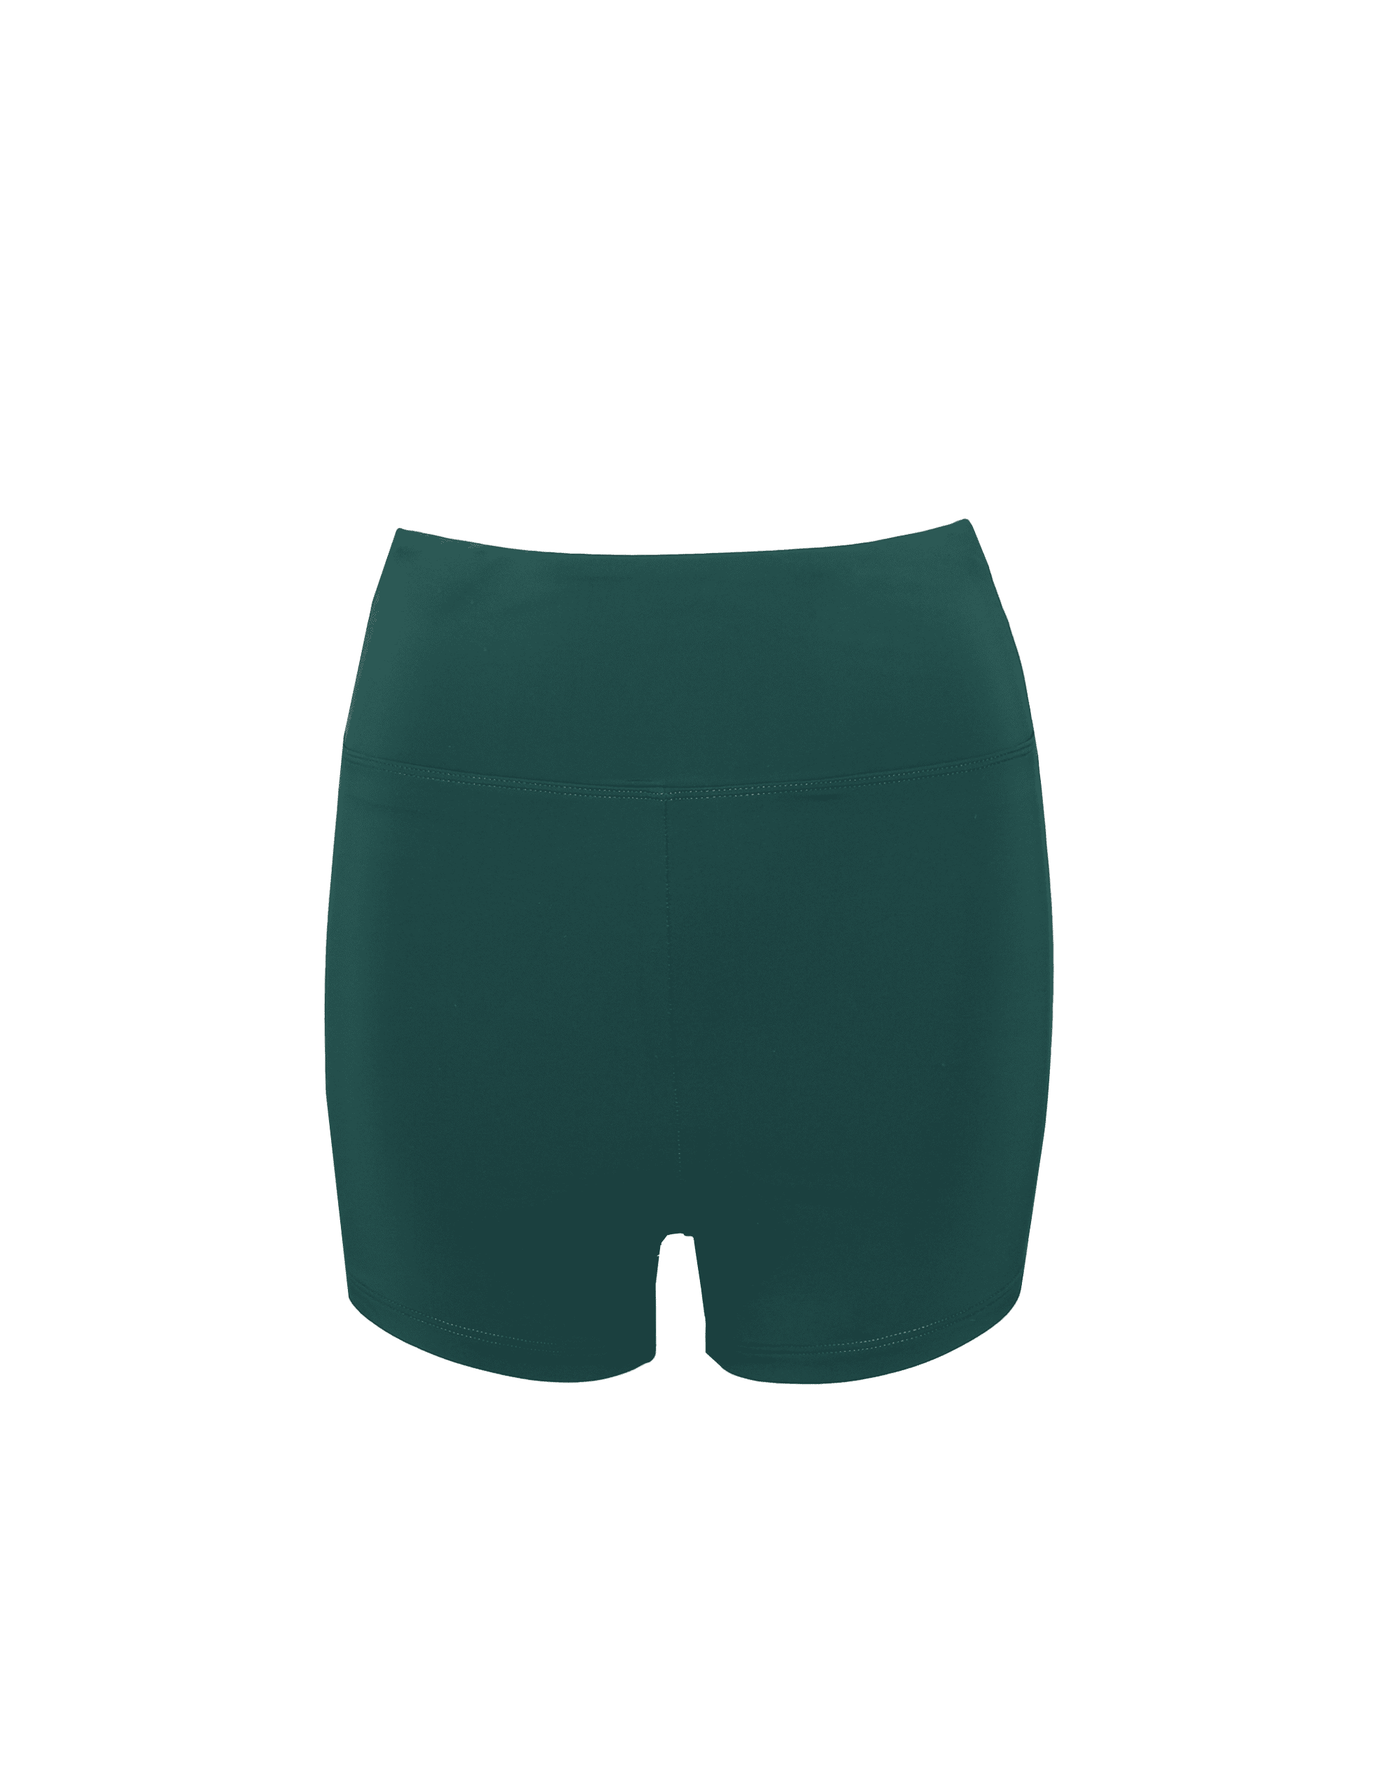 Starboard Swim Shorts (Lake Green) - High Waisted Swim Shorts - Women's Swim - Charcoal Clothing mix-and-match